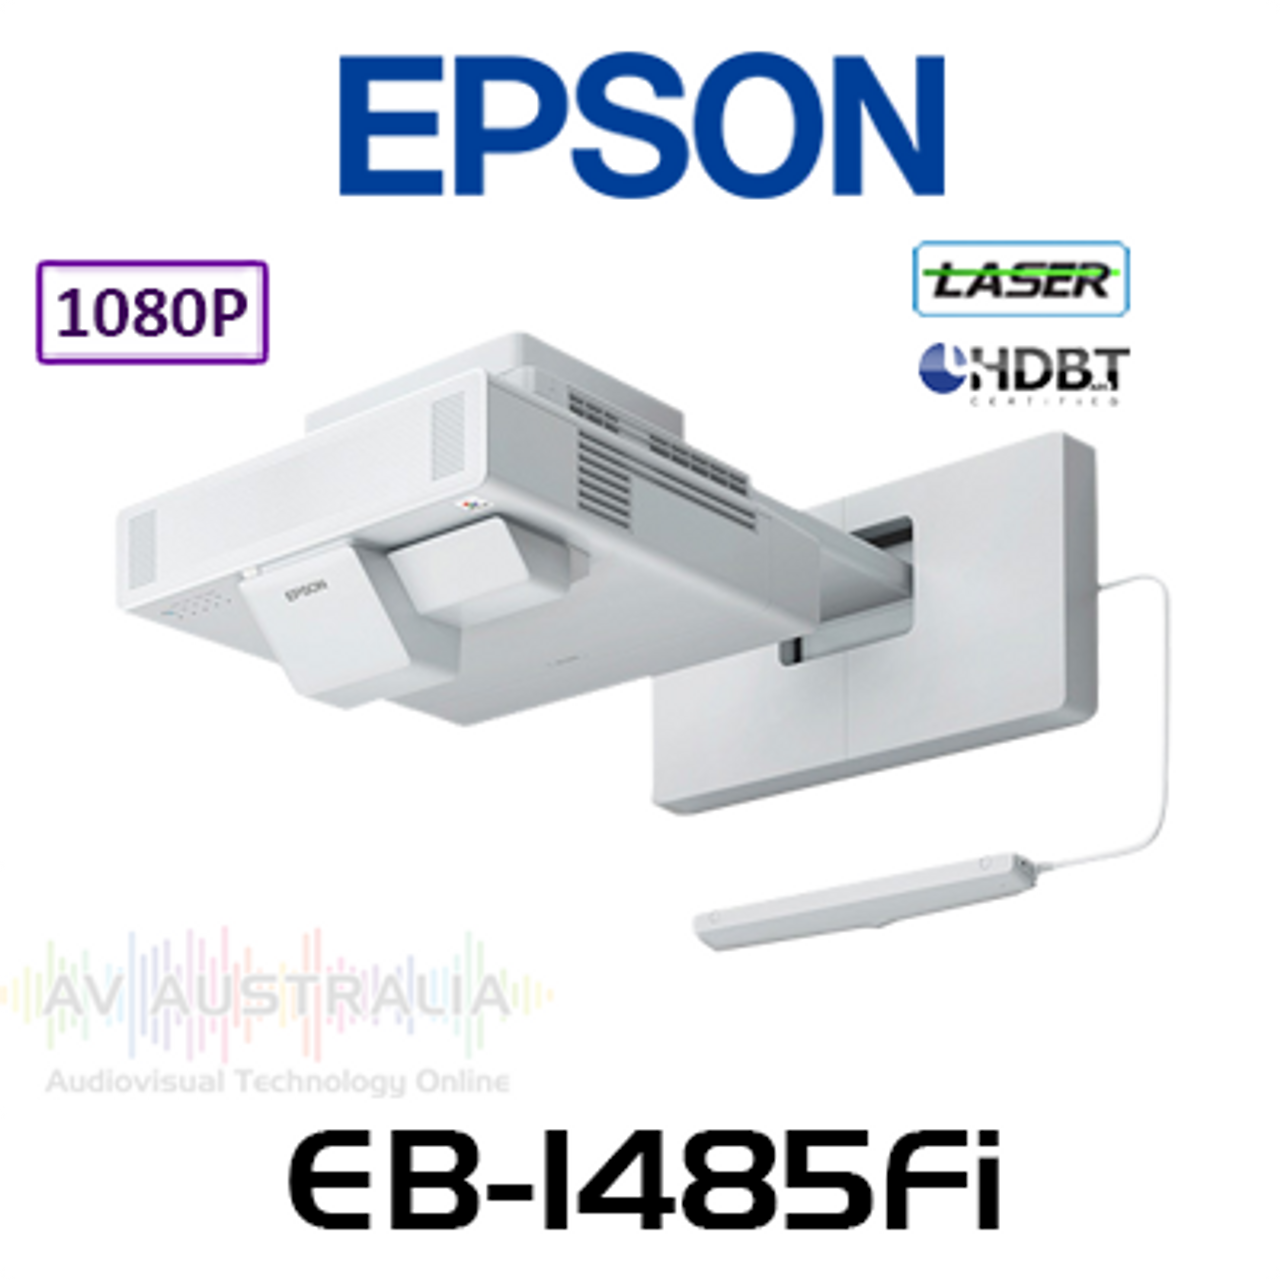 Epson Eb 1485fi Full Hd 5000 Lumen Hdbaset Interactive Ultra Short